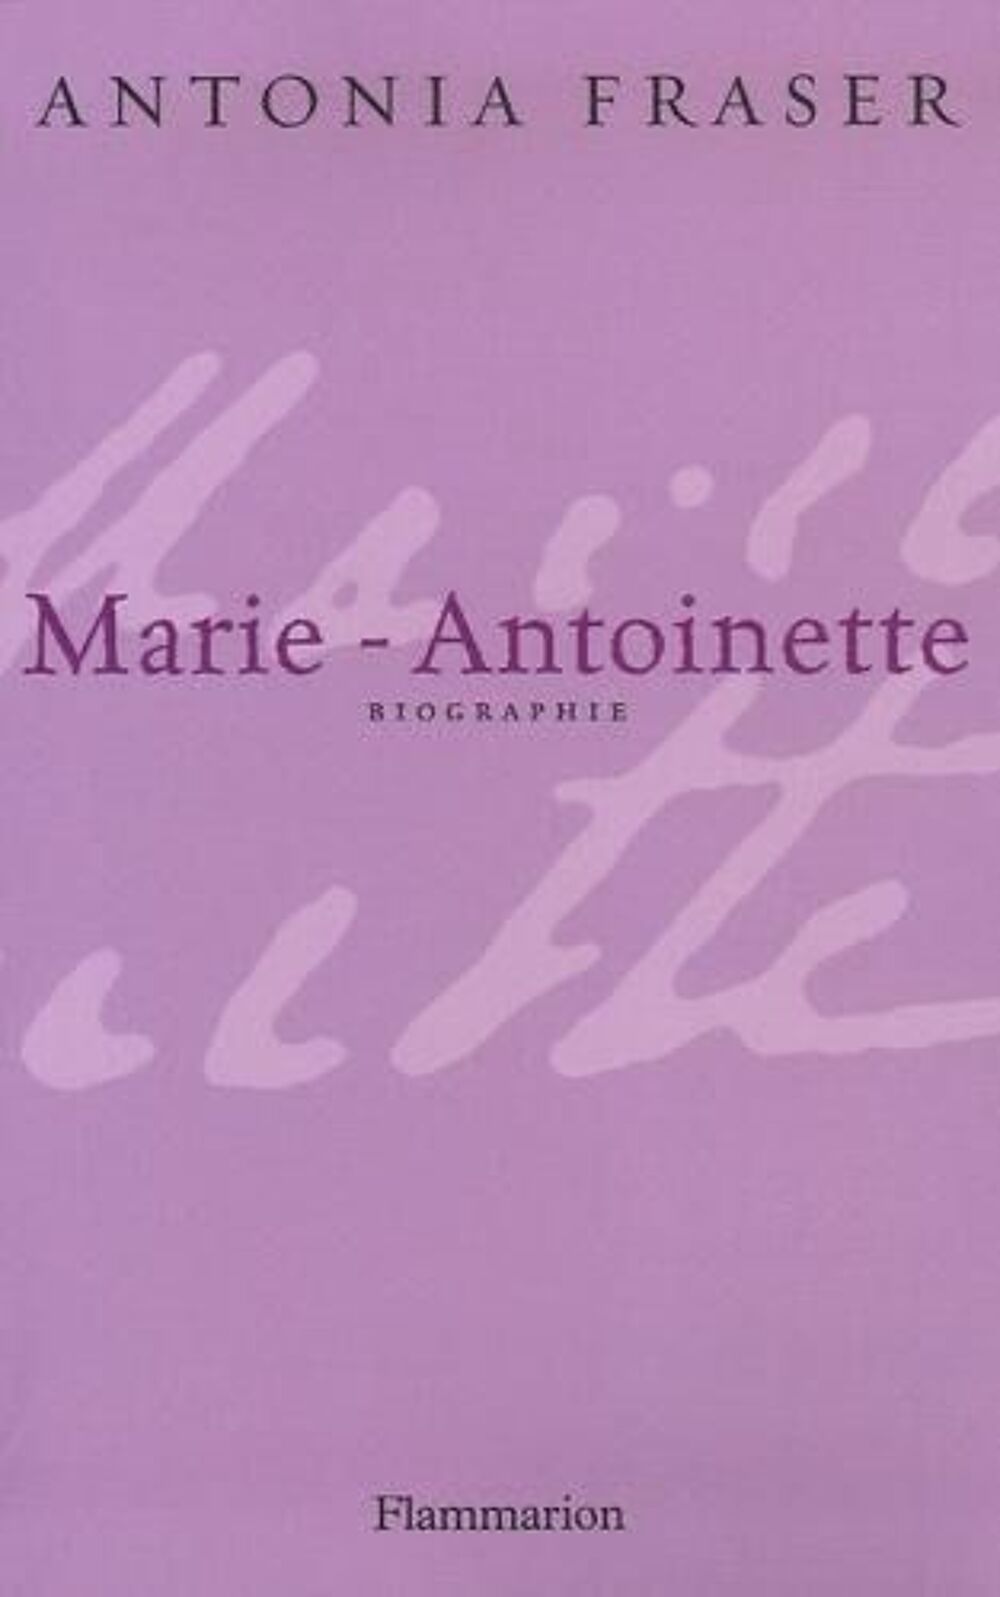 Marie Antoinette 
Livres et BD